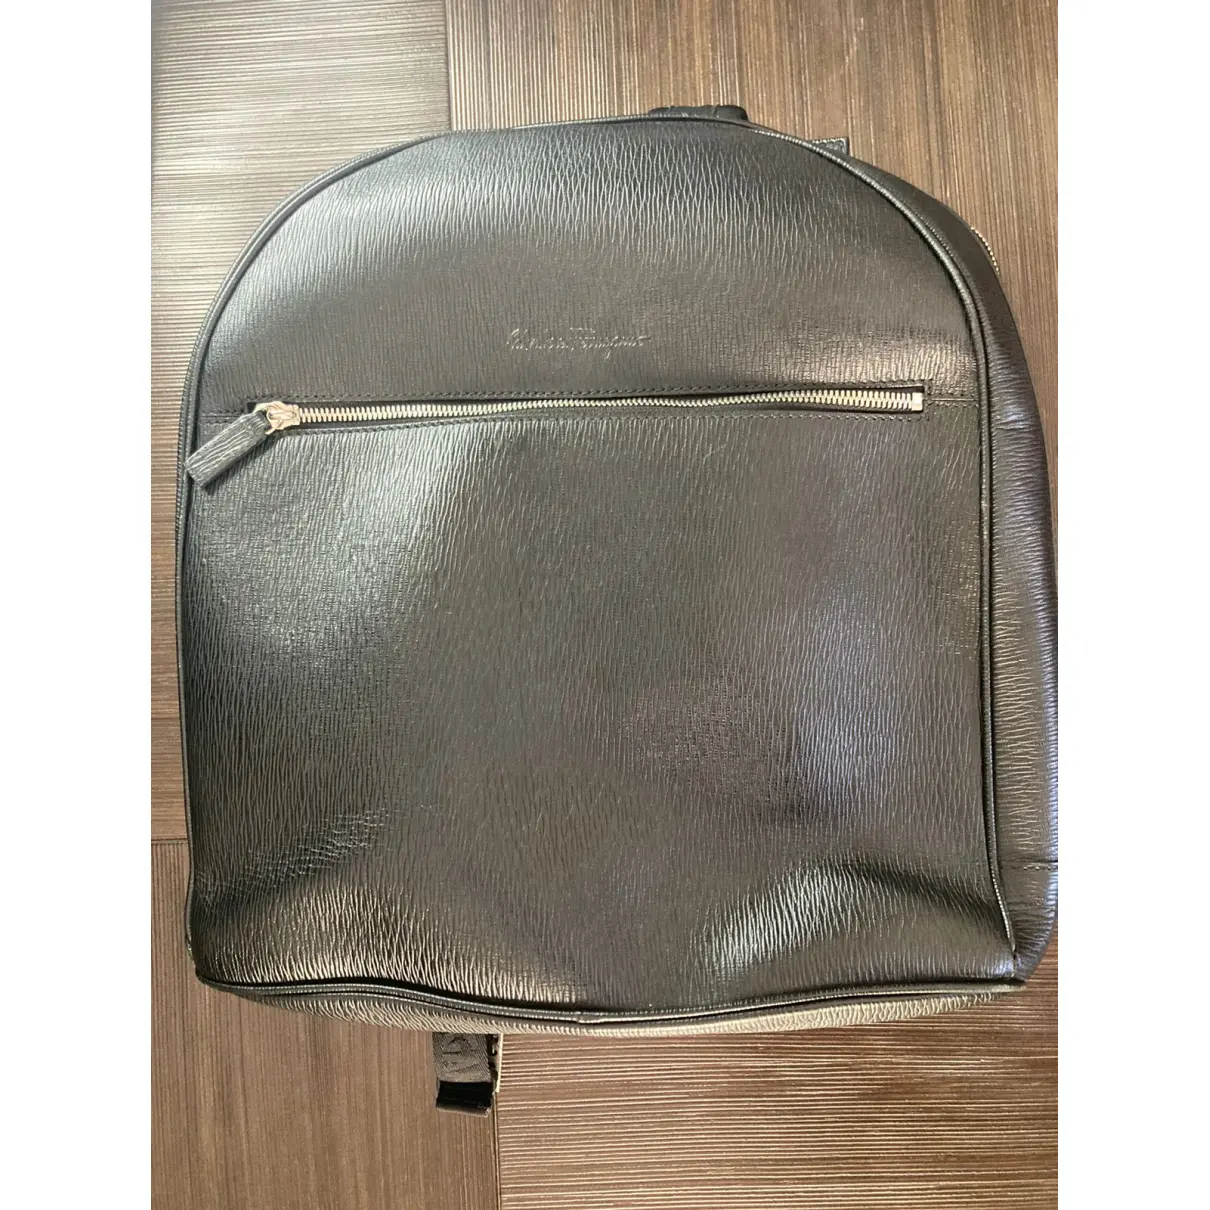 Patent leather bag Salvatore Ferragamo